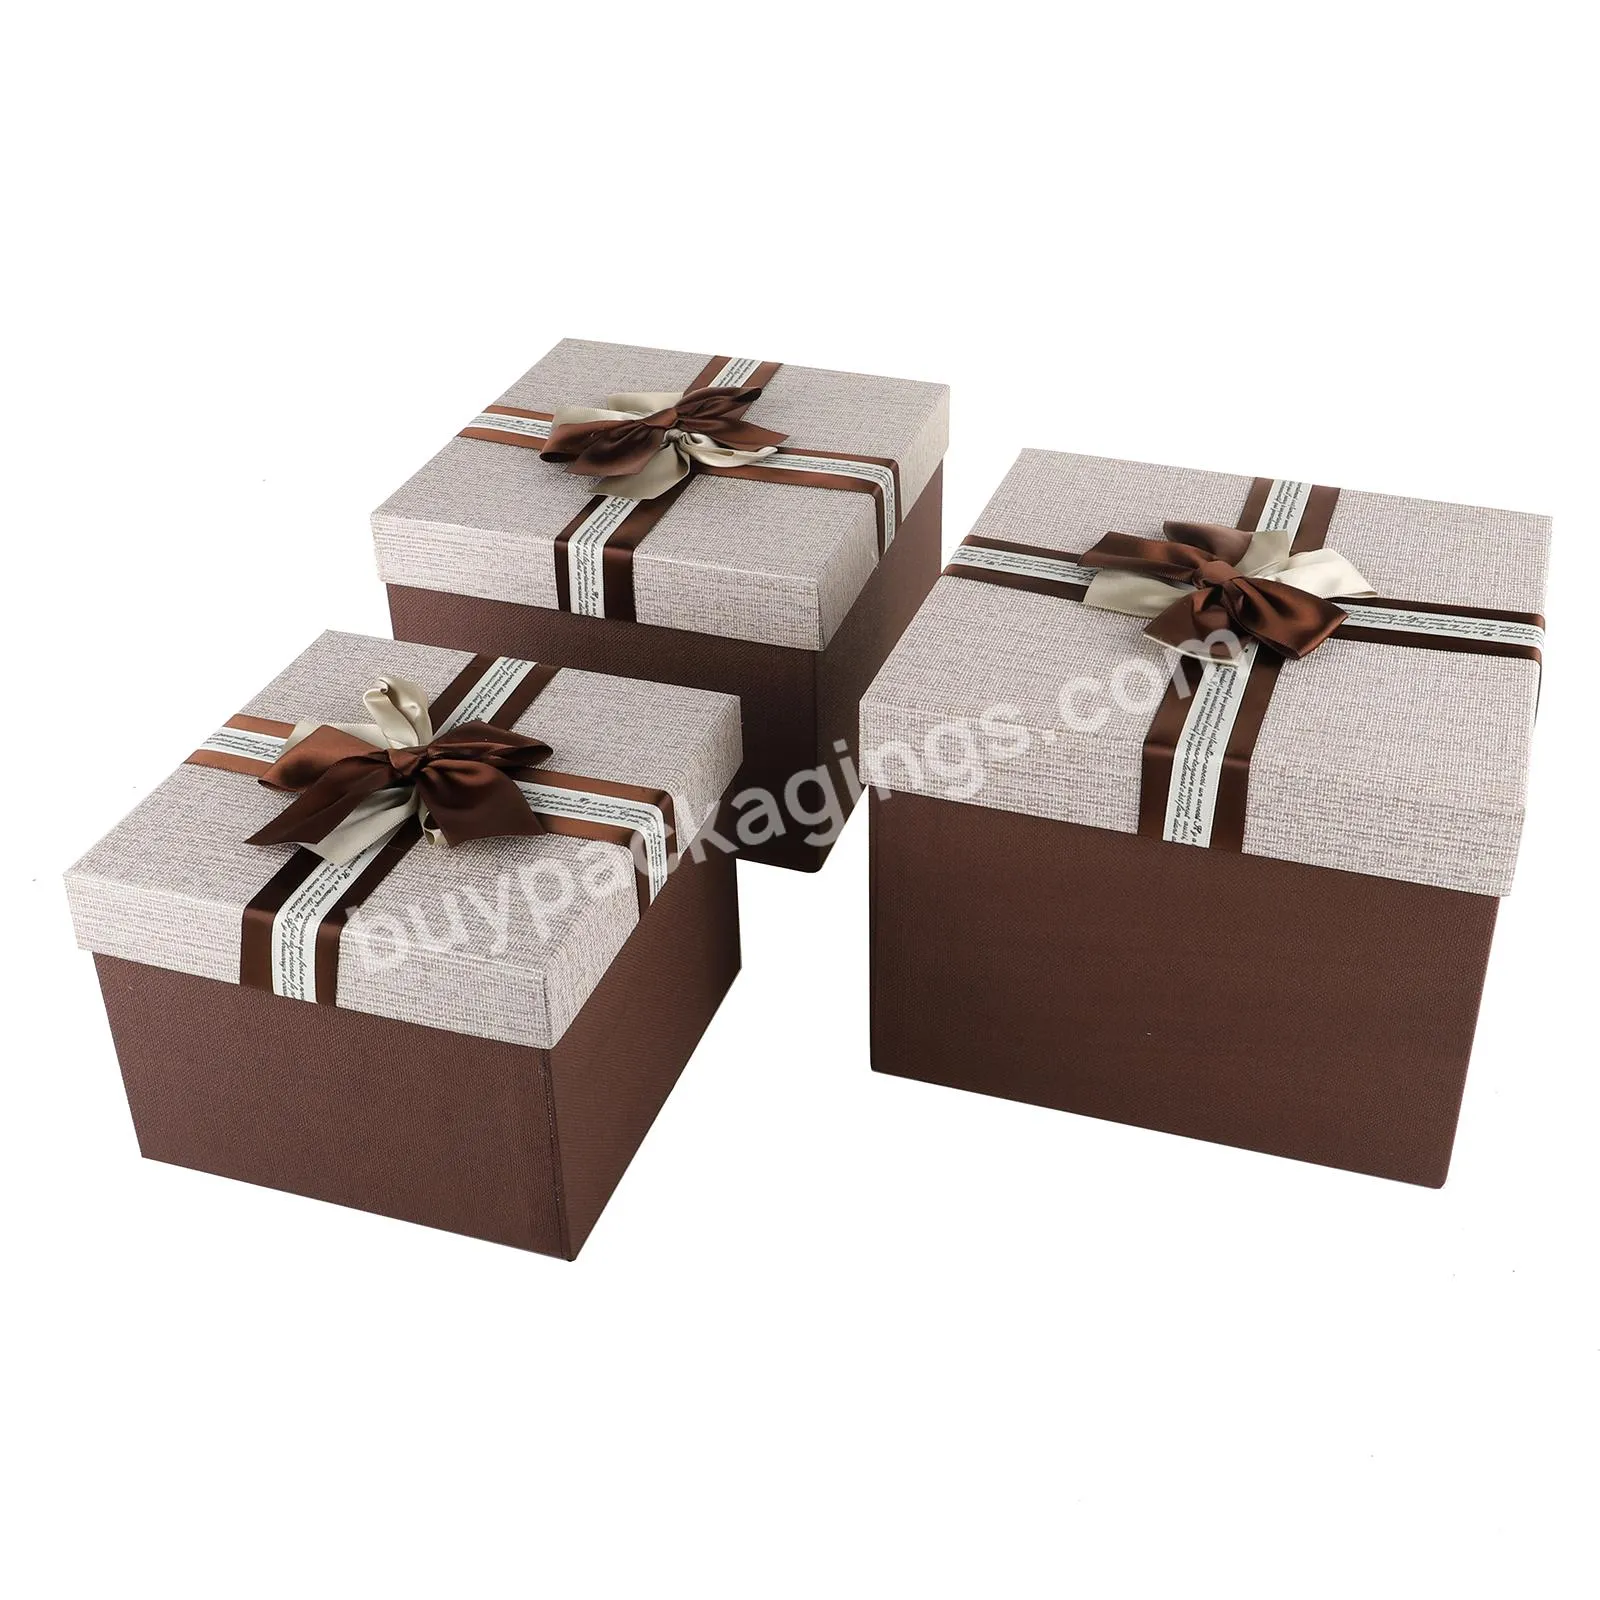 Wholesale Romantic Orange Luxury Rigid Cardboard Paper Packing Gift Box Set With Ribbon Tie